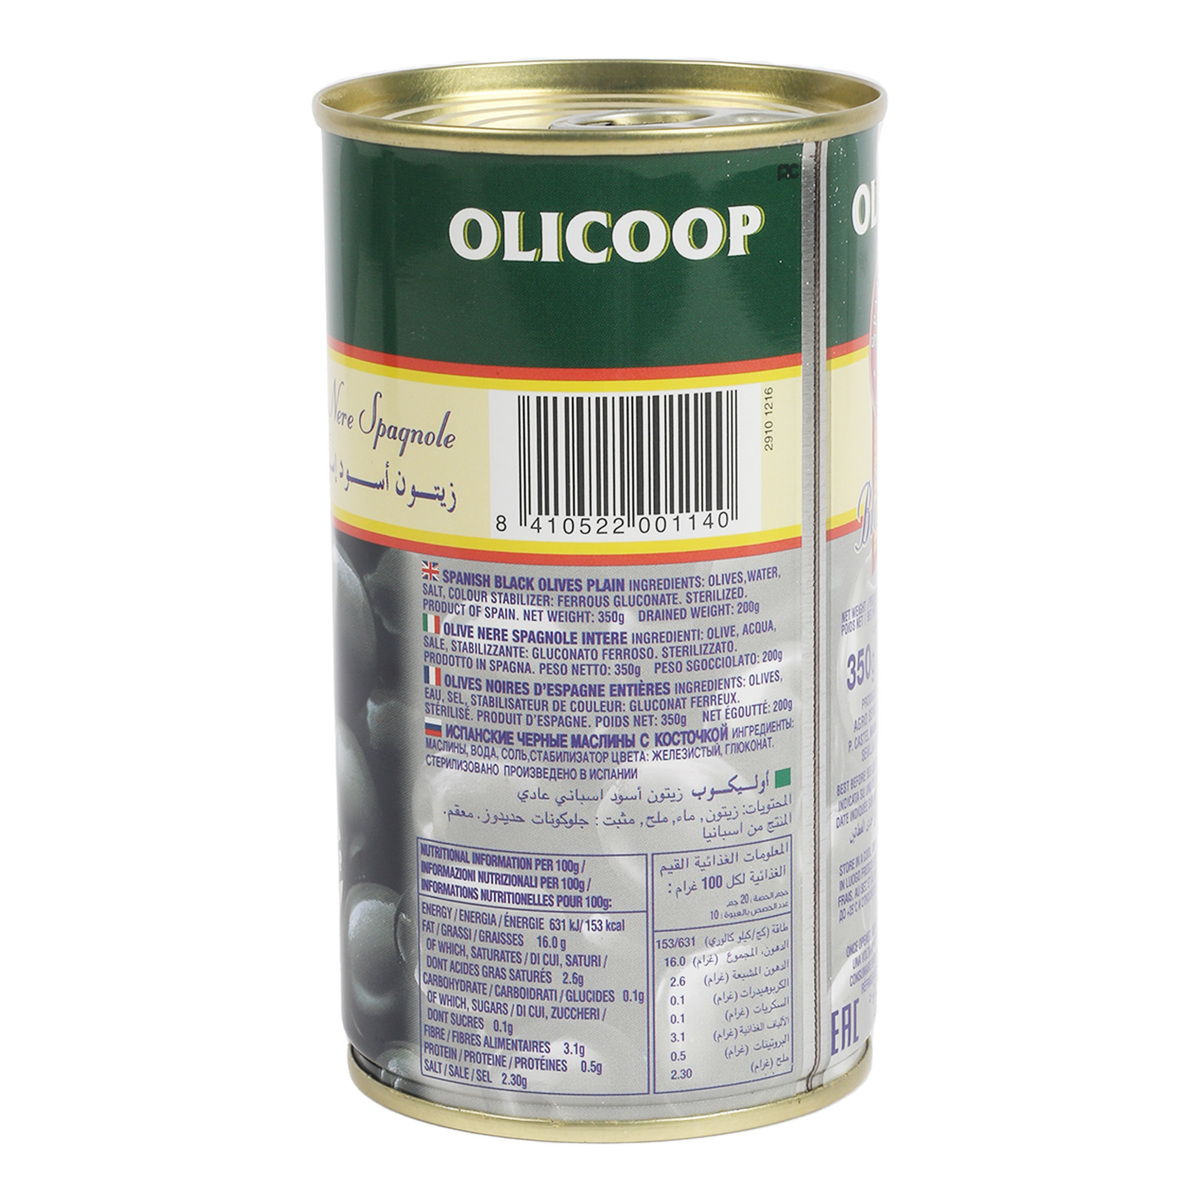 Olicoop Black Olives 350 g